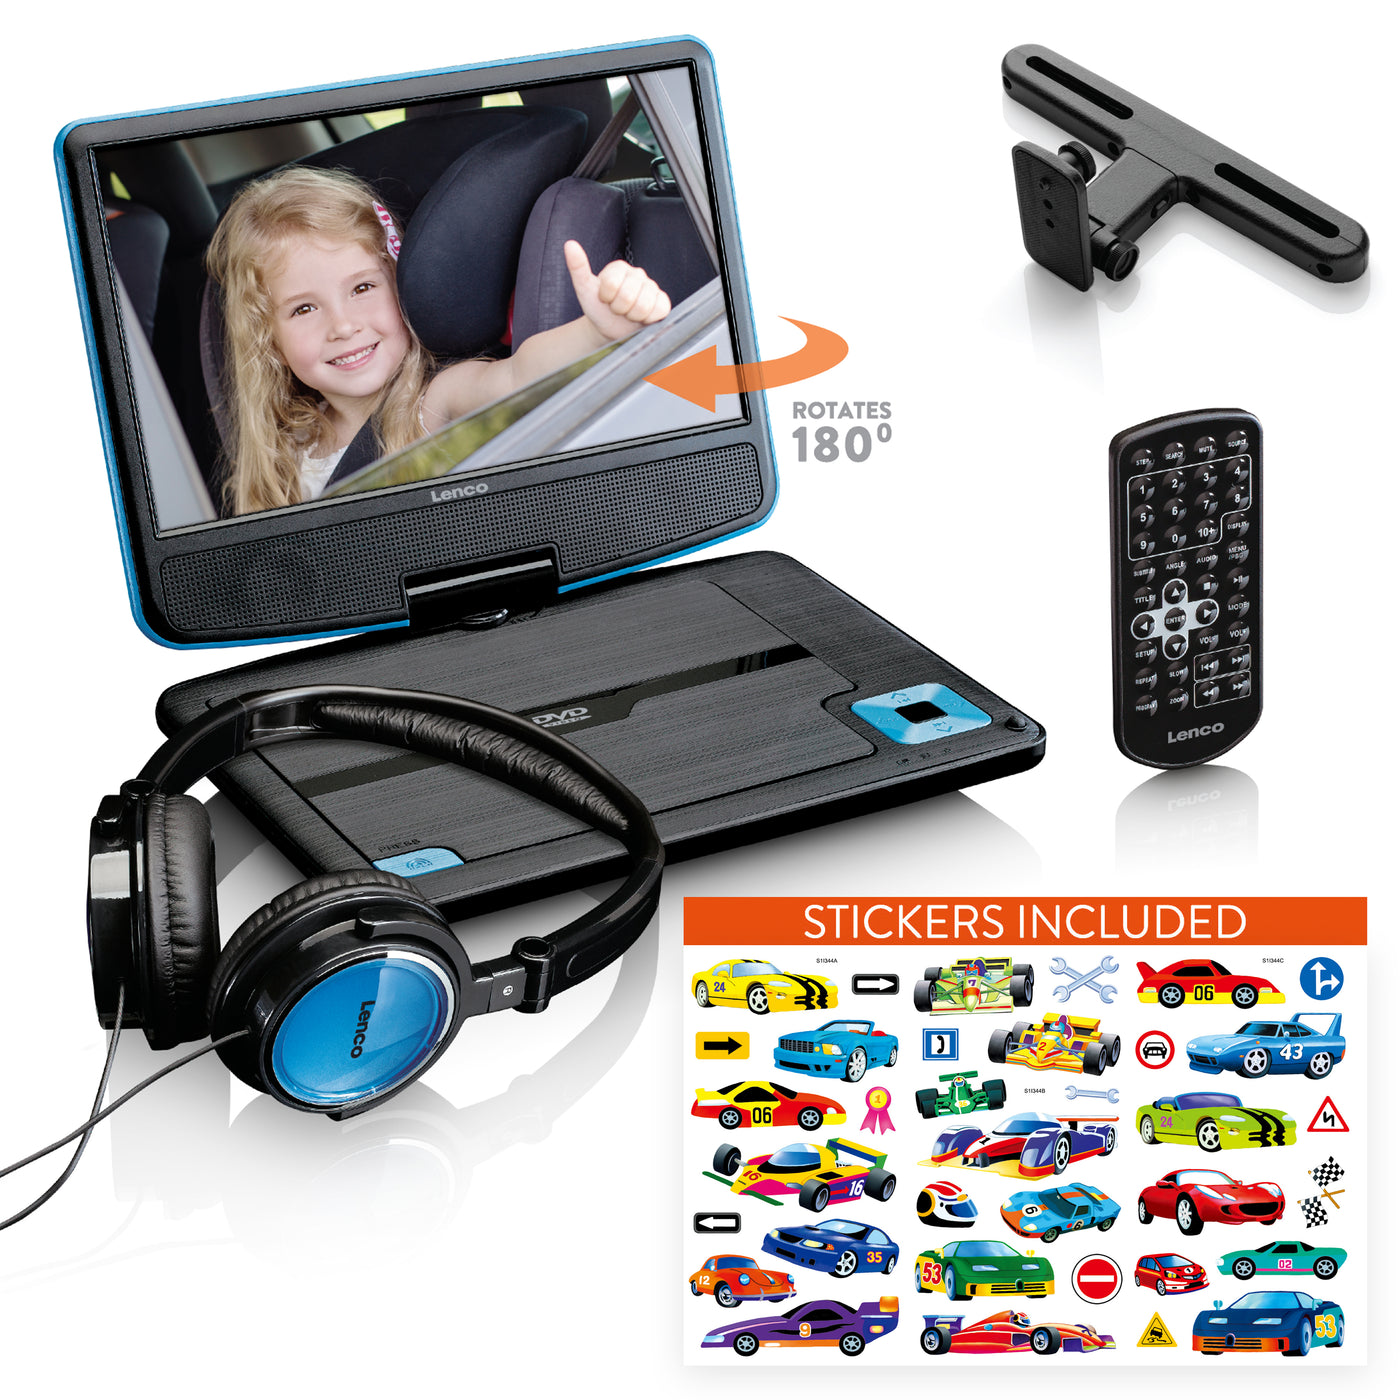 LENCO DVP-920BU - Portable 9" DVD player with USB headphones and mounting bracket - Blue/Black